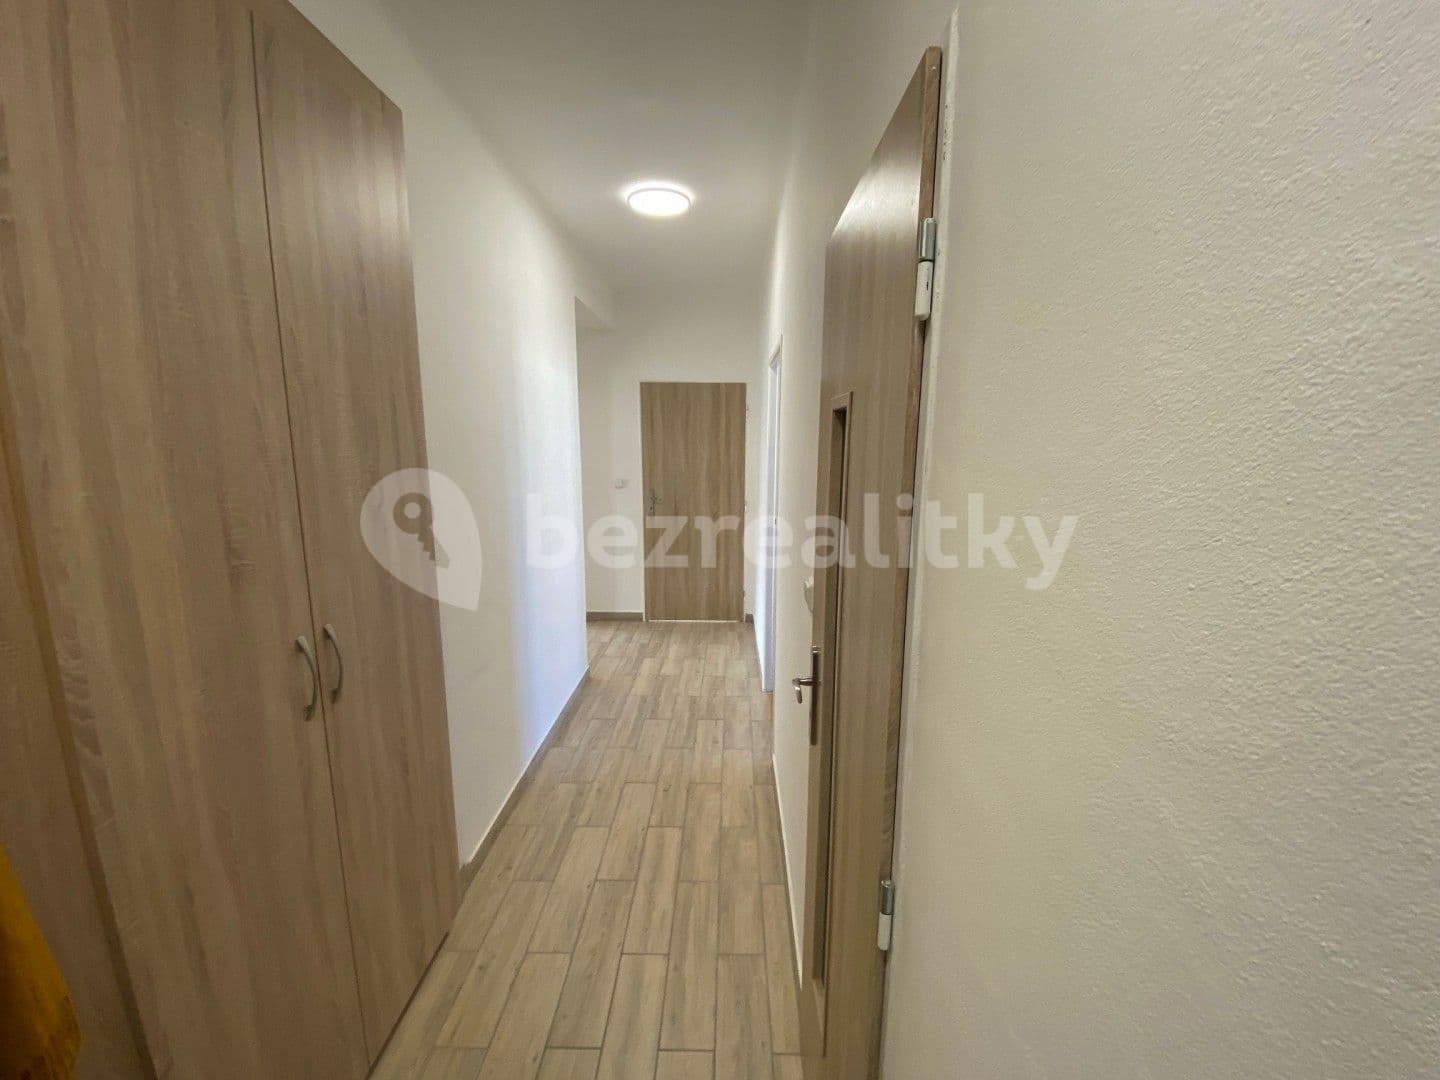 Predaj bytu 3-izbový 64 m², Francouzská, Kopřivnice, Moravskoslezský kraj